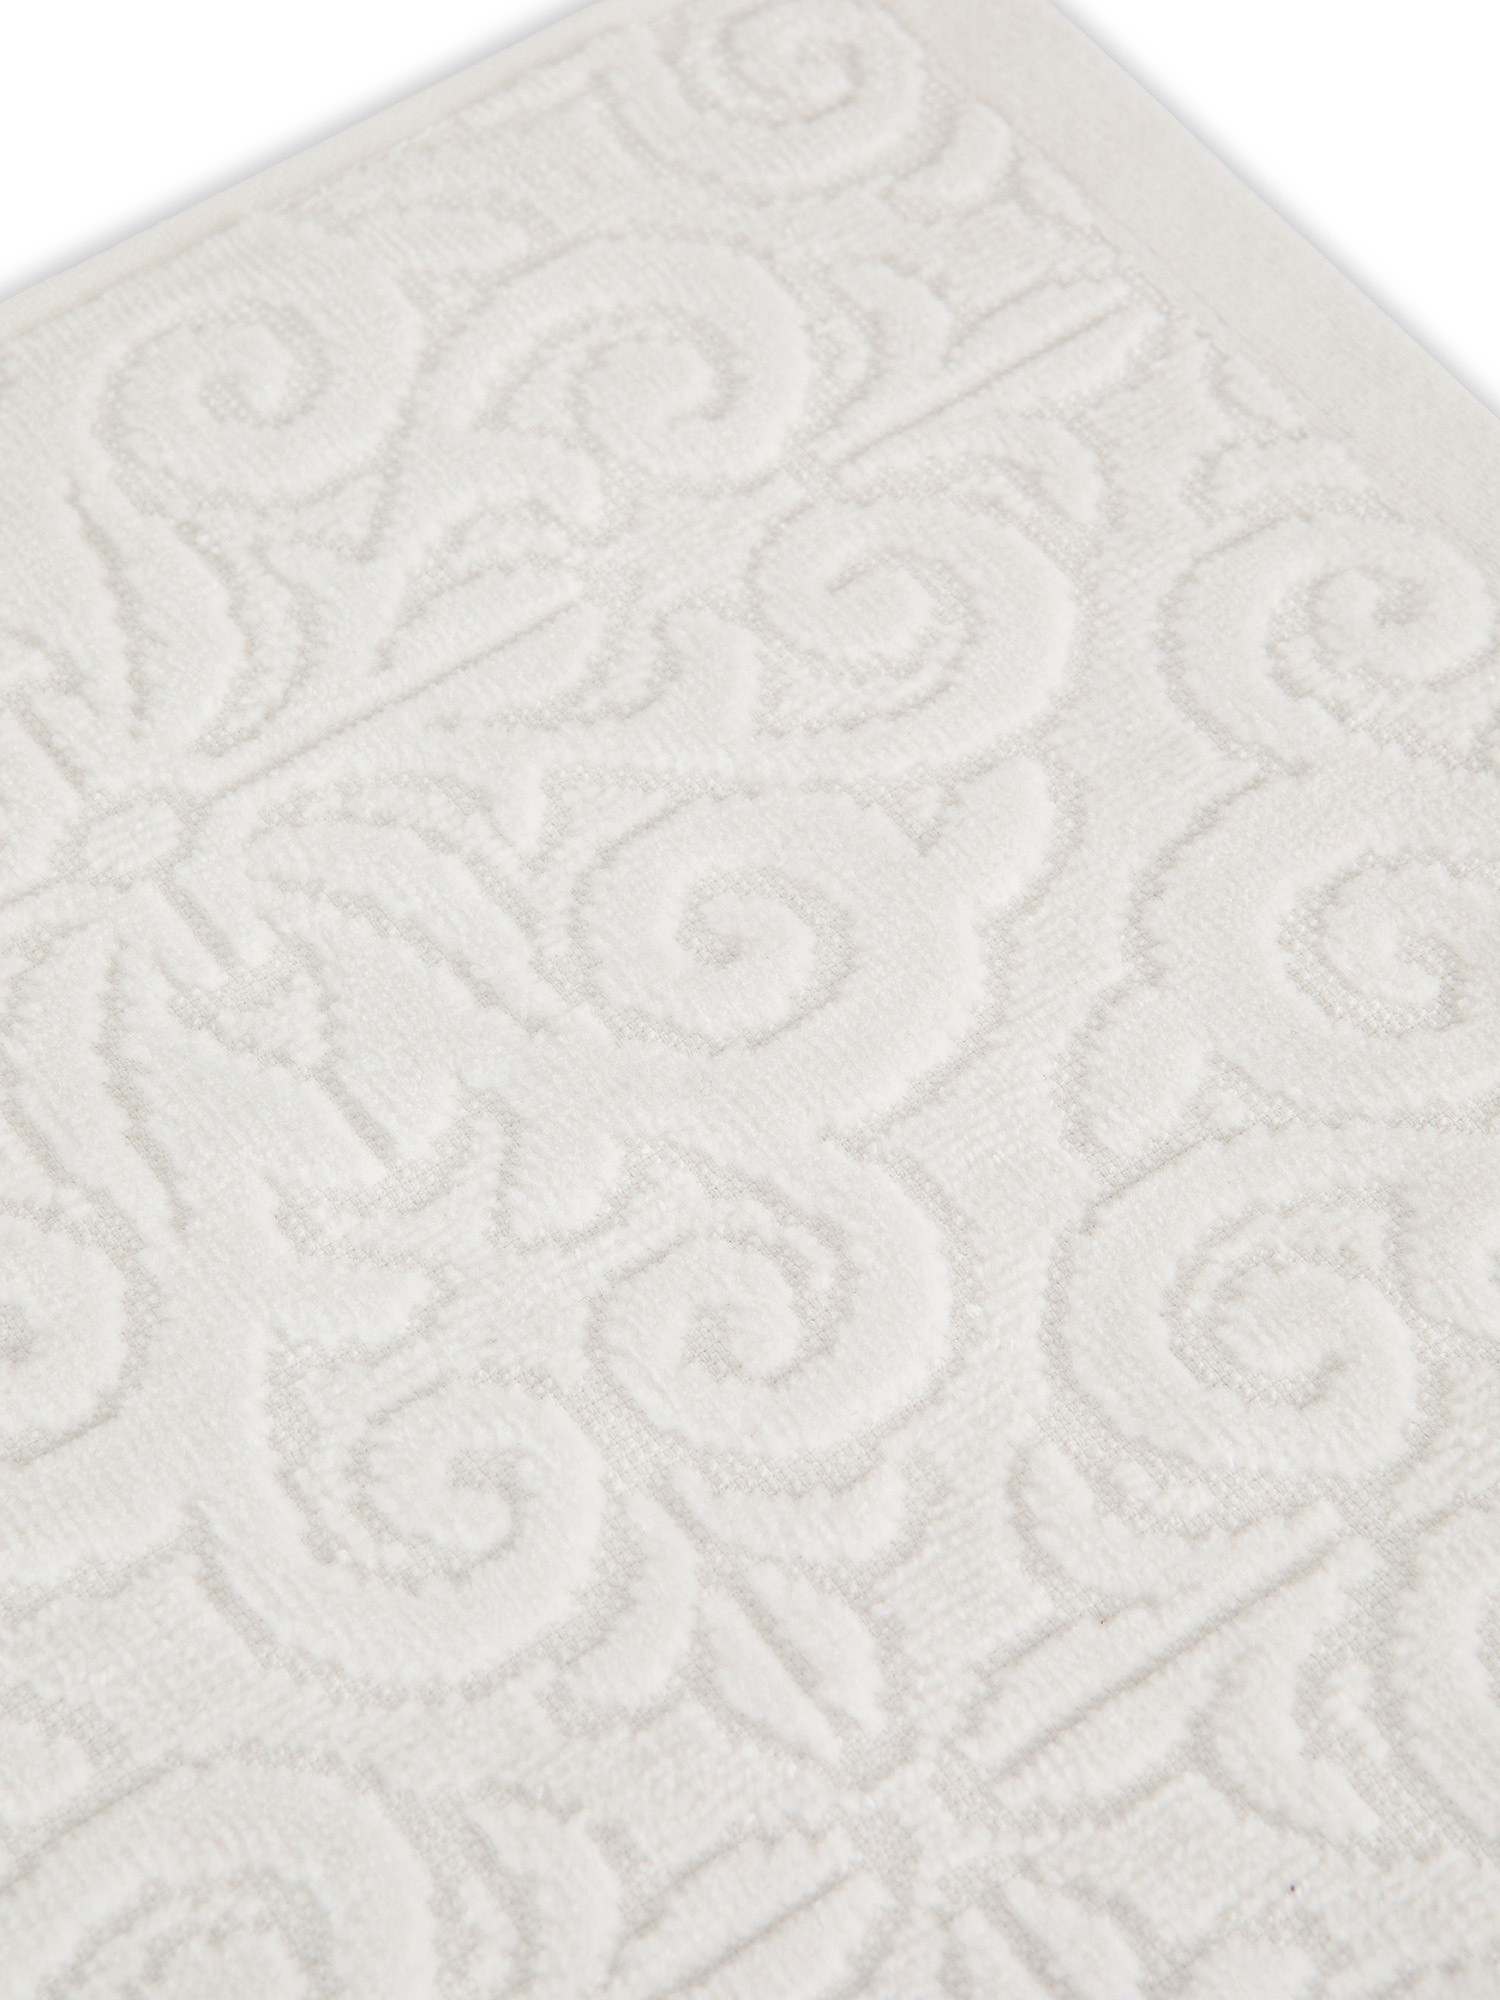 Asciugamano cotone velour motivo azulejos, Bianco, large